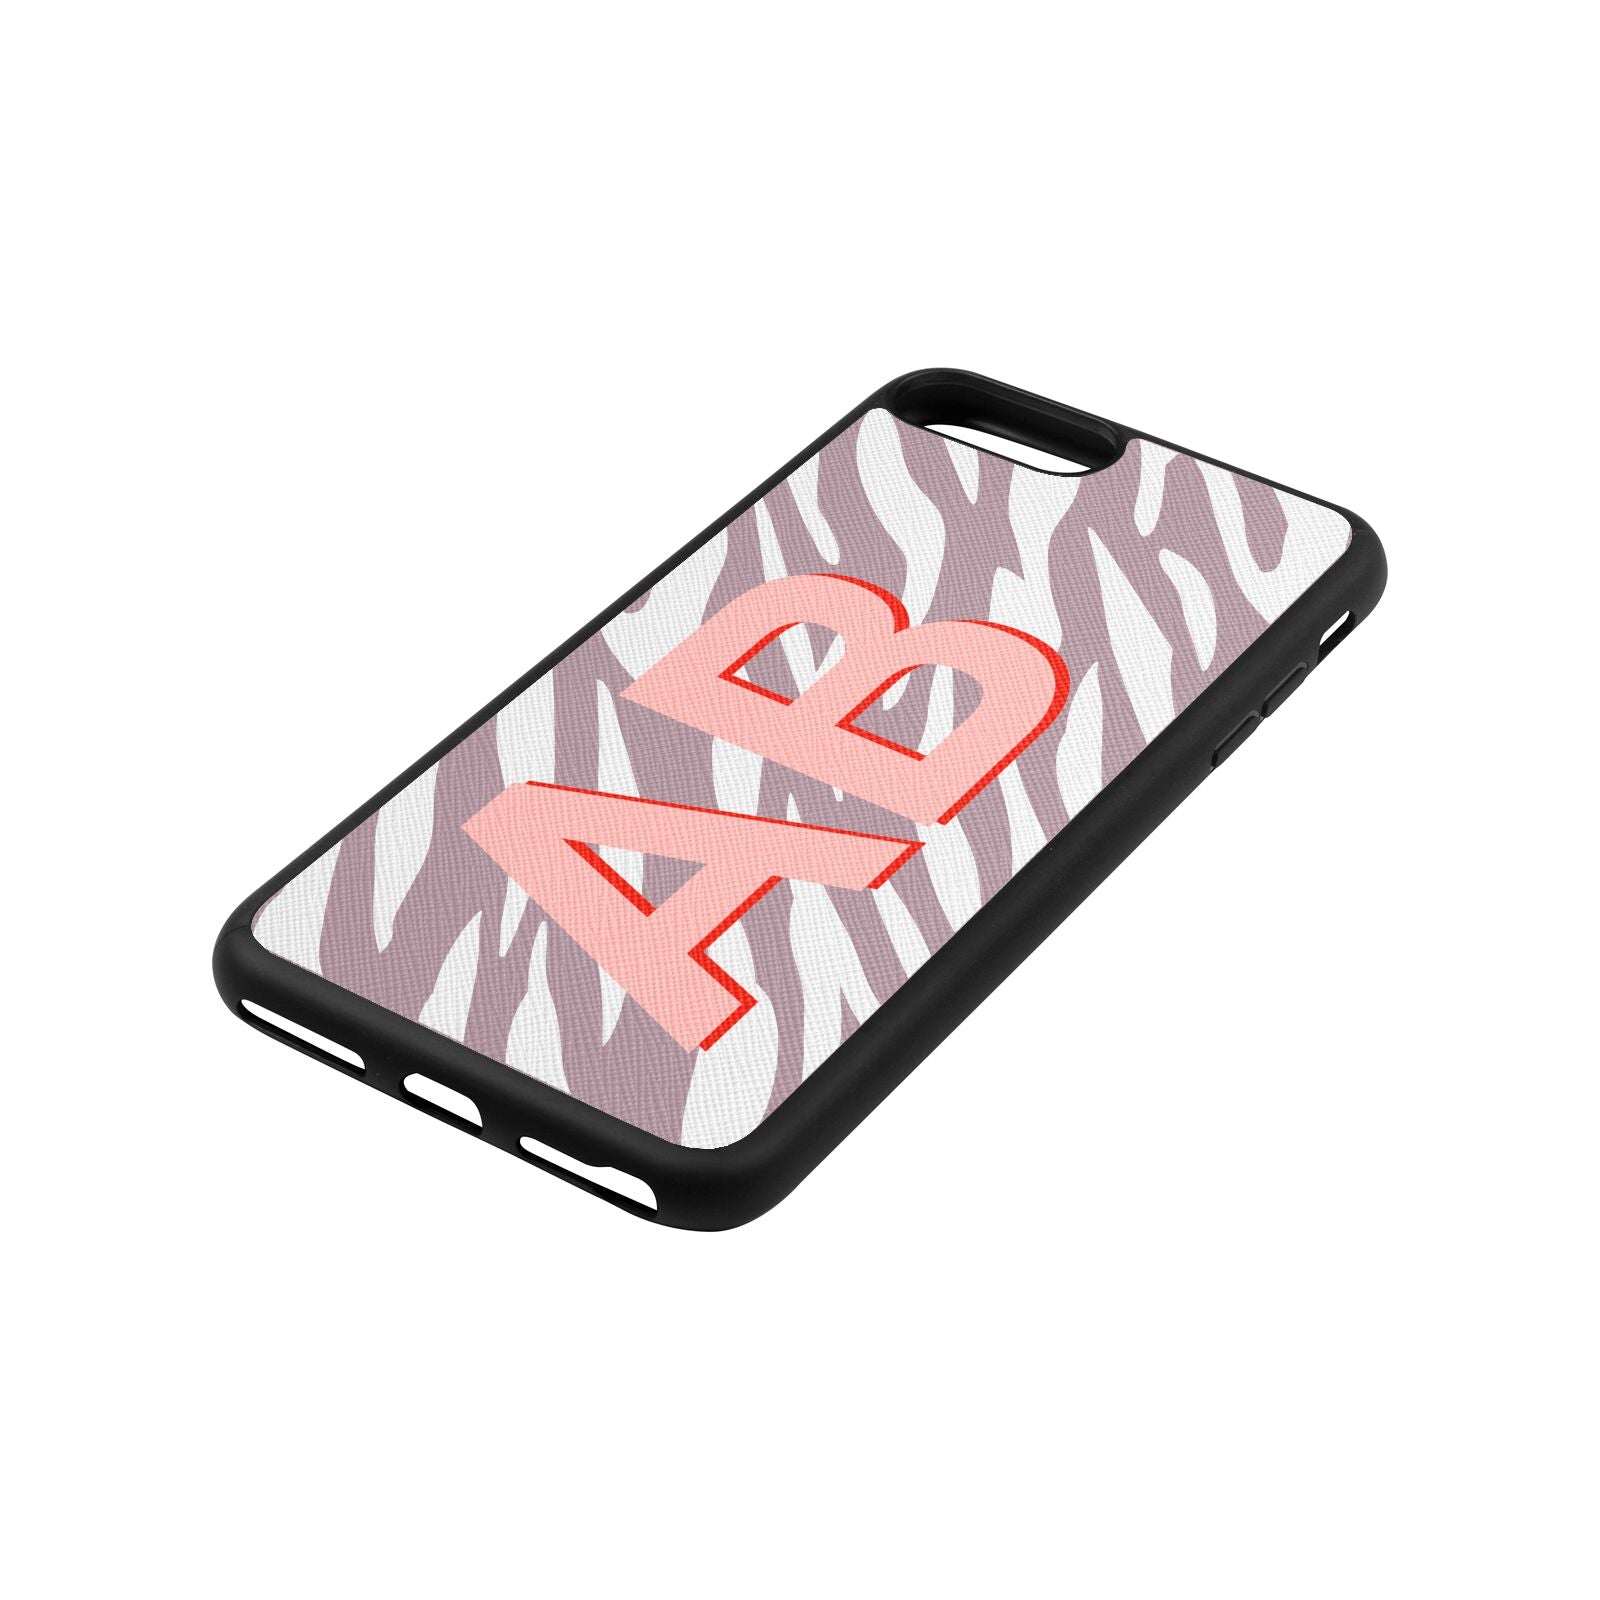 Zebra Initials Lotus Saffiano Leather iPhone 8 Plus Case Side Angle